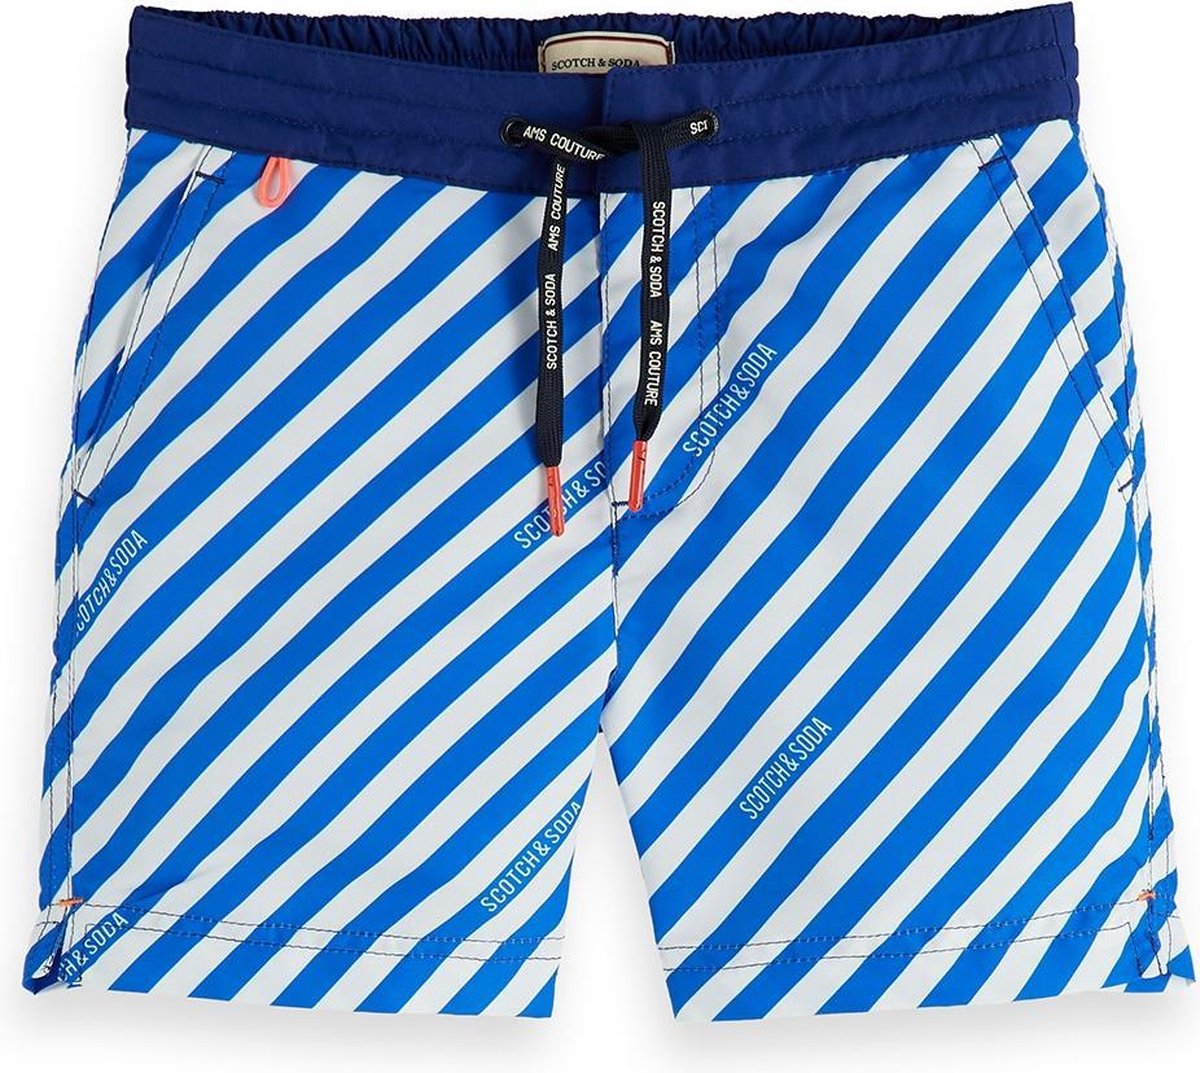 Swimm short Stripes, Scotch Shrunk | bol.com